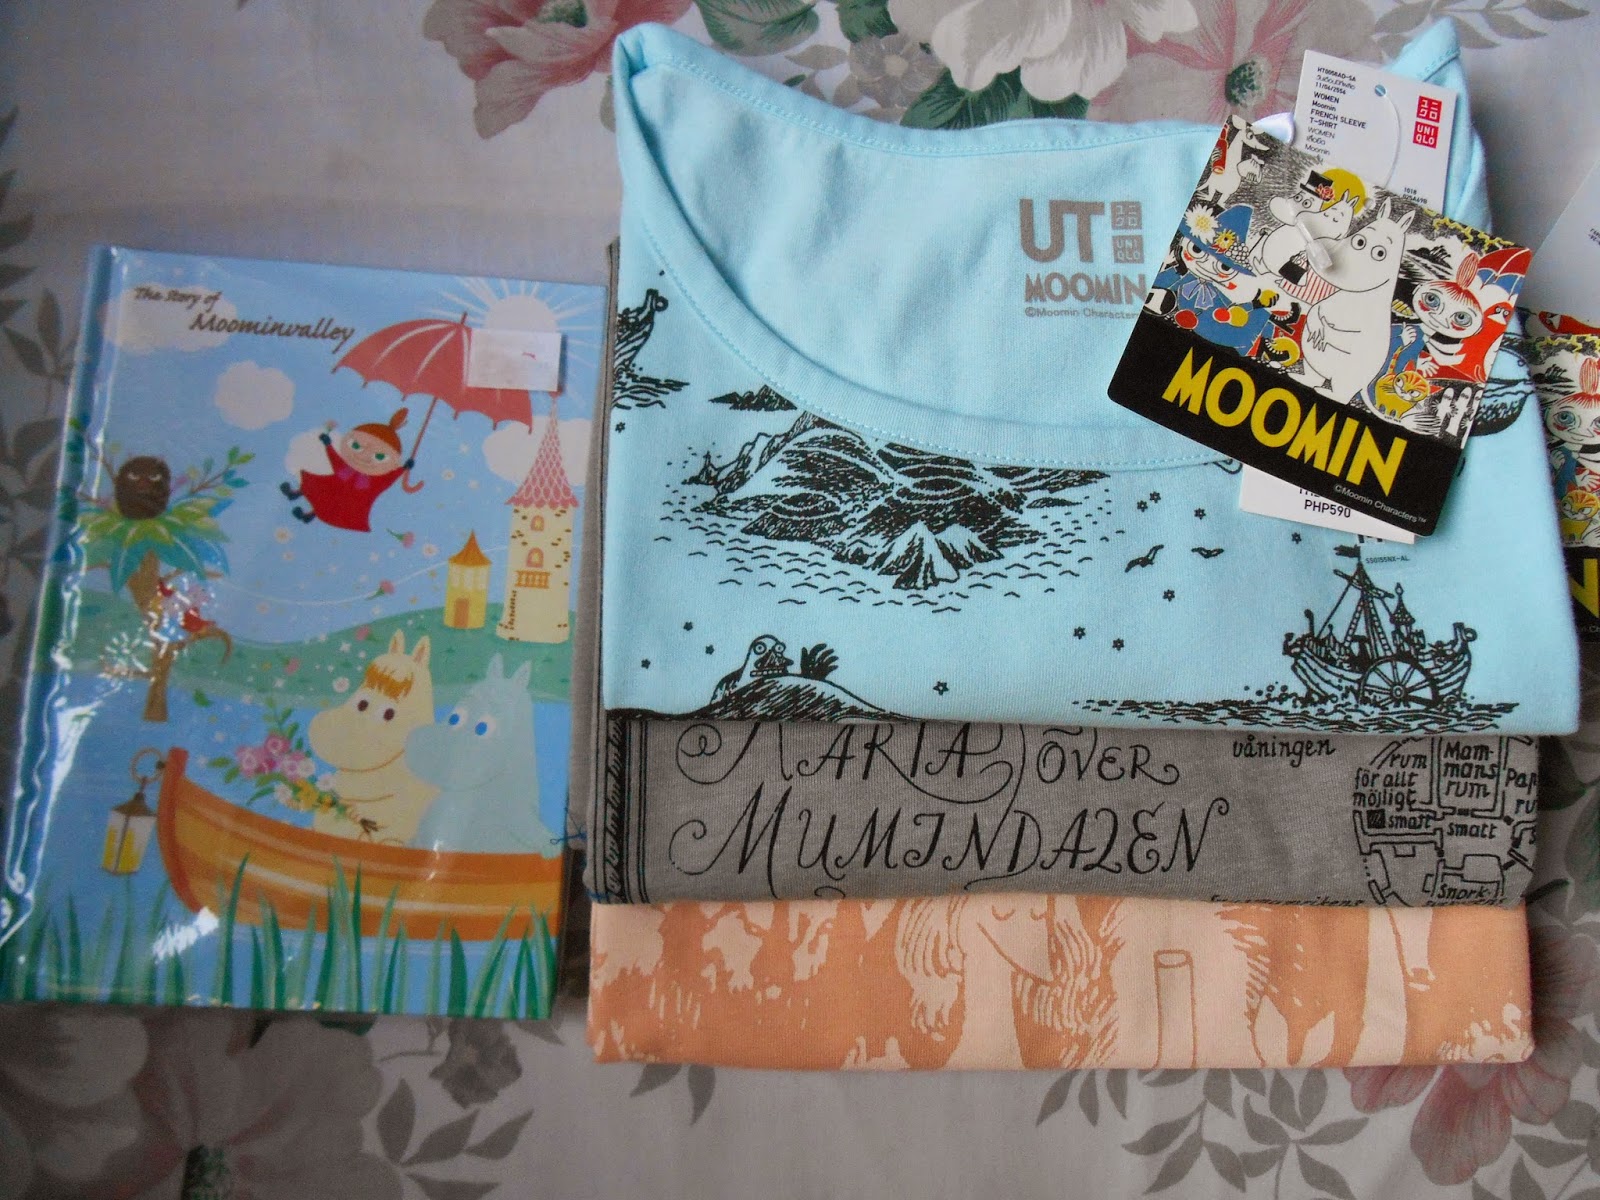 Uniqlo UT Moomin Women's T-shirts and Moomin Diary